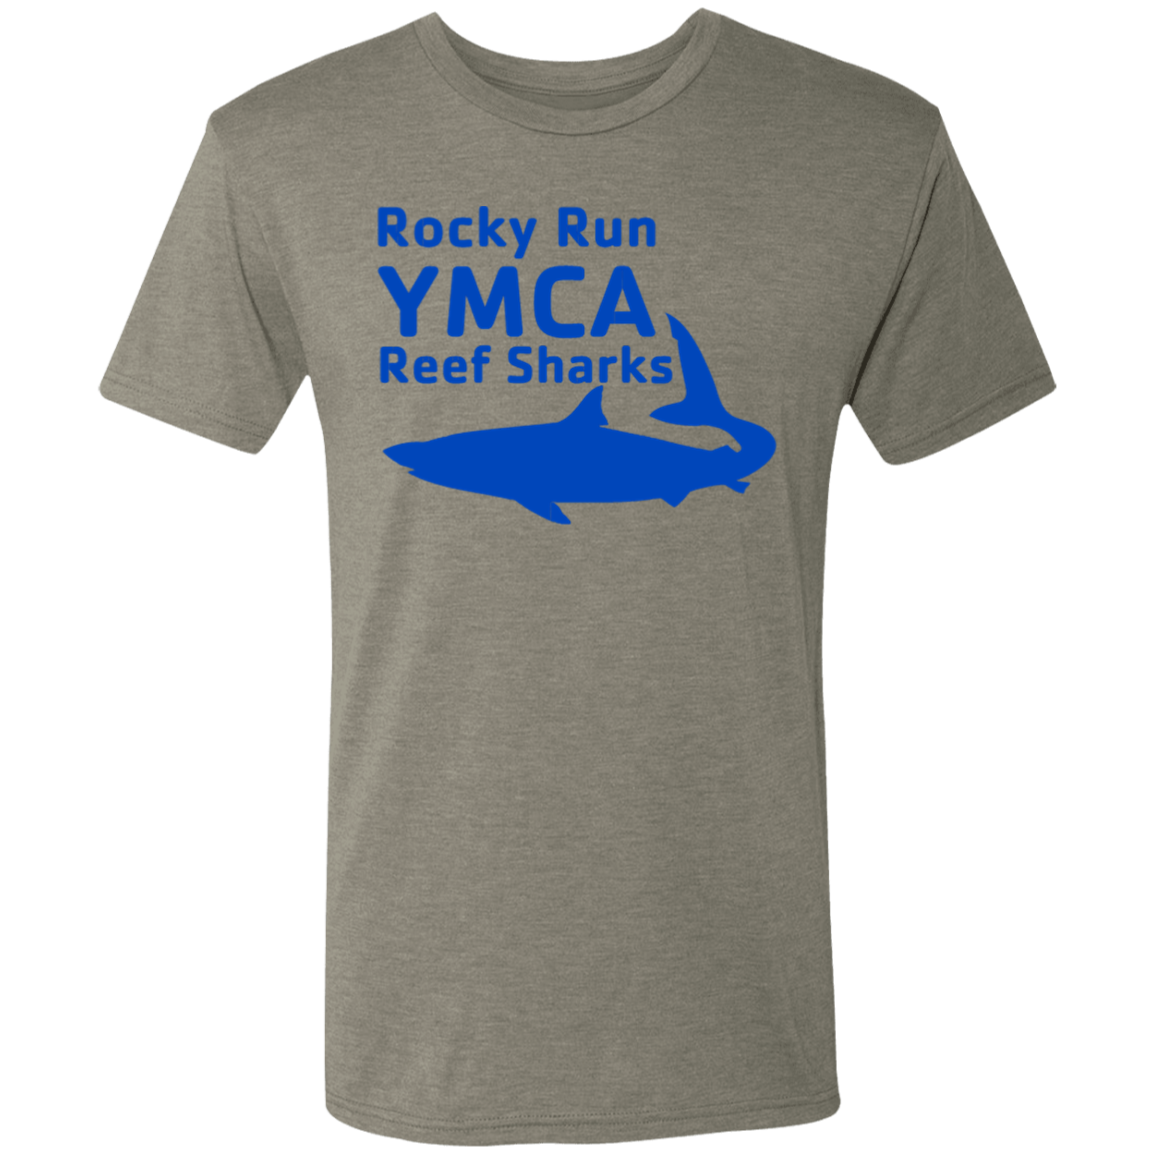 Rocky Run TeamStore Men's Triblend T-Shirt